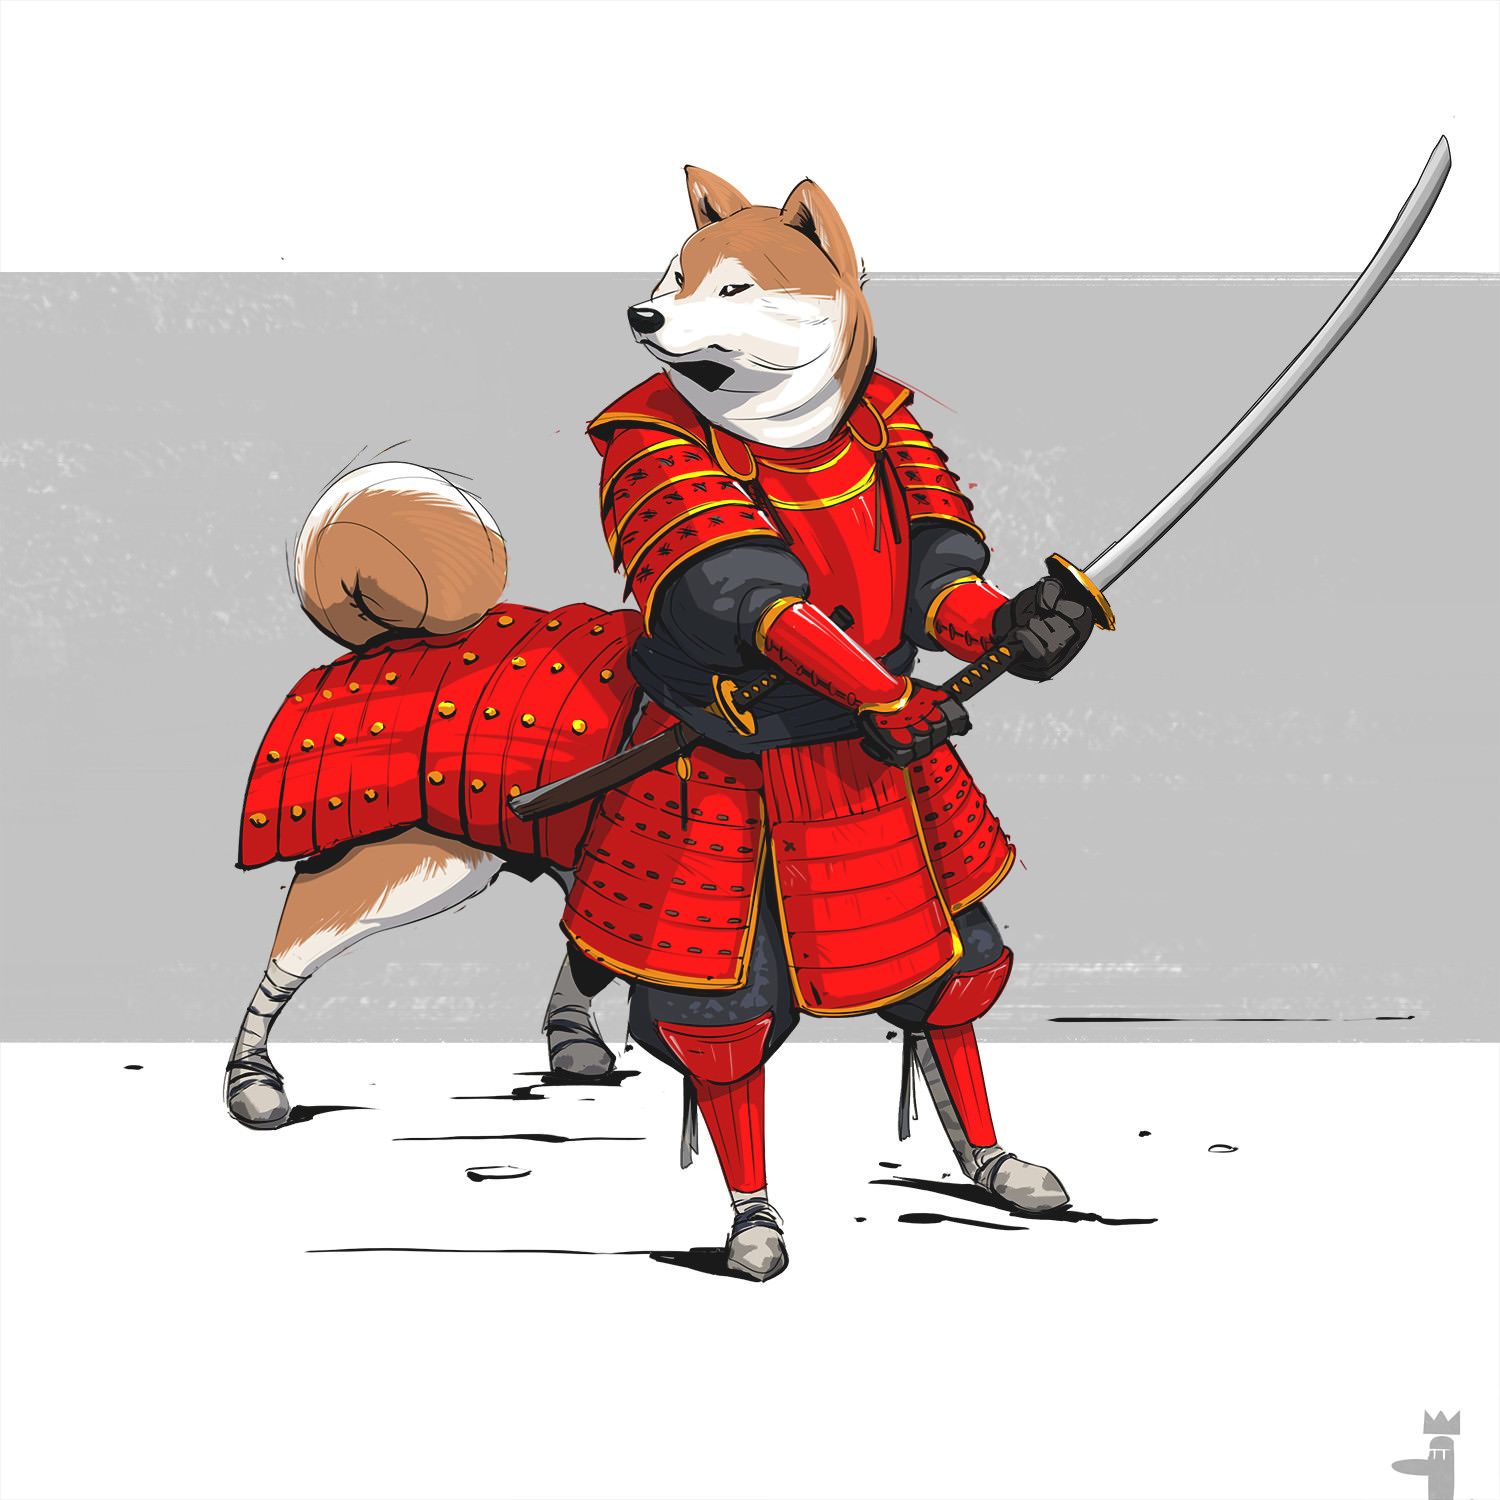 Samurai doge [3840x2160] : r/wallpaper